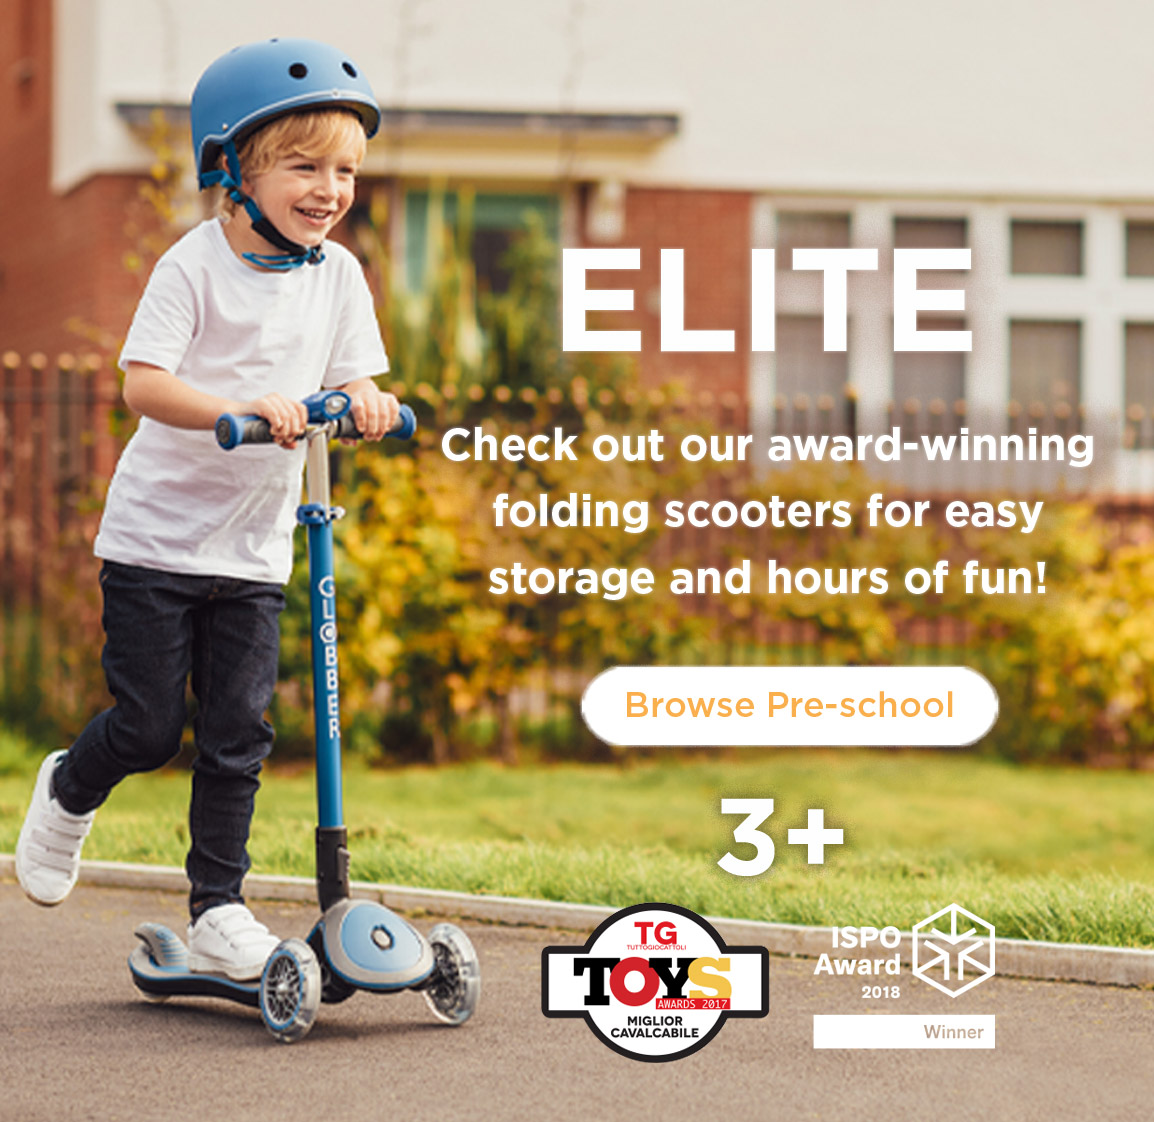 Globber-ELITE-award-winning-foldable-scooters-for-kids